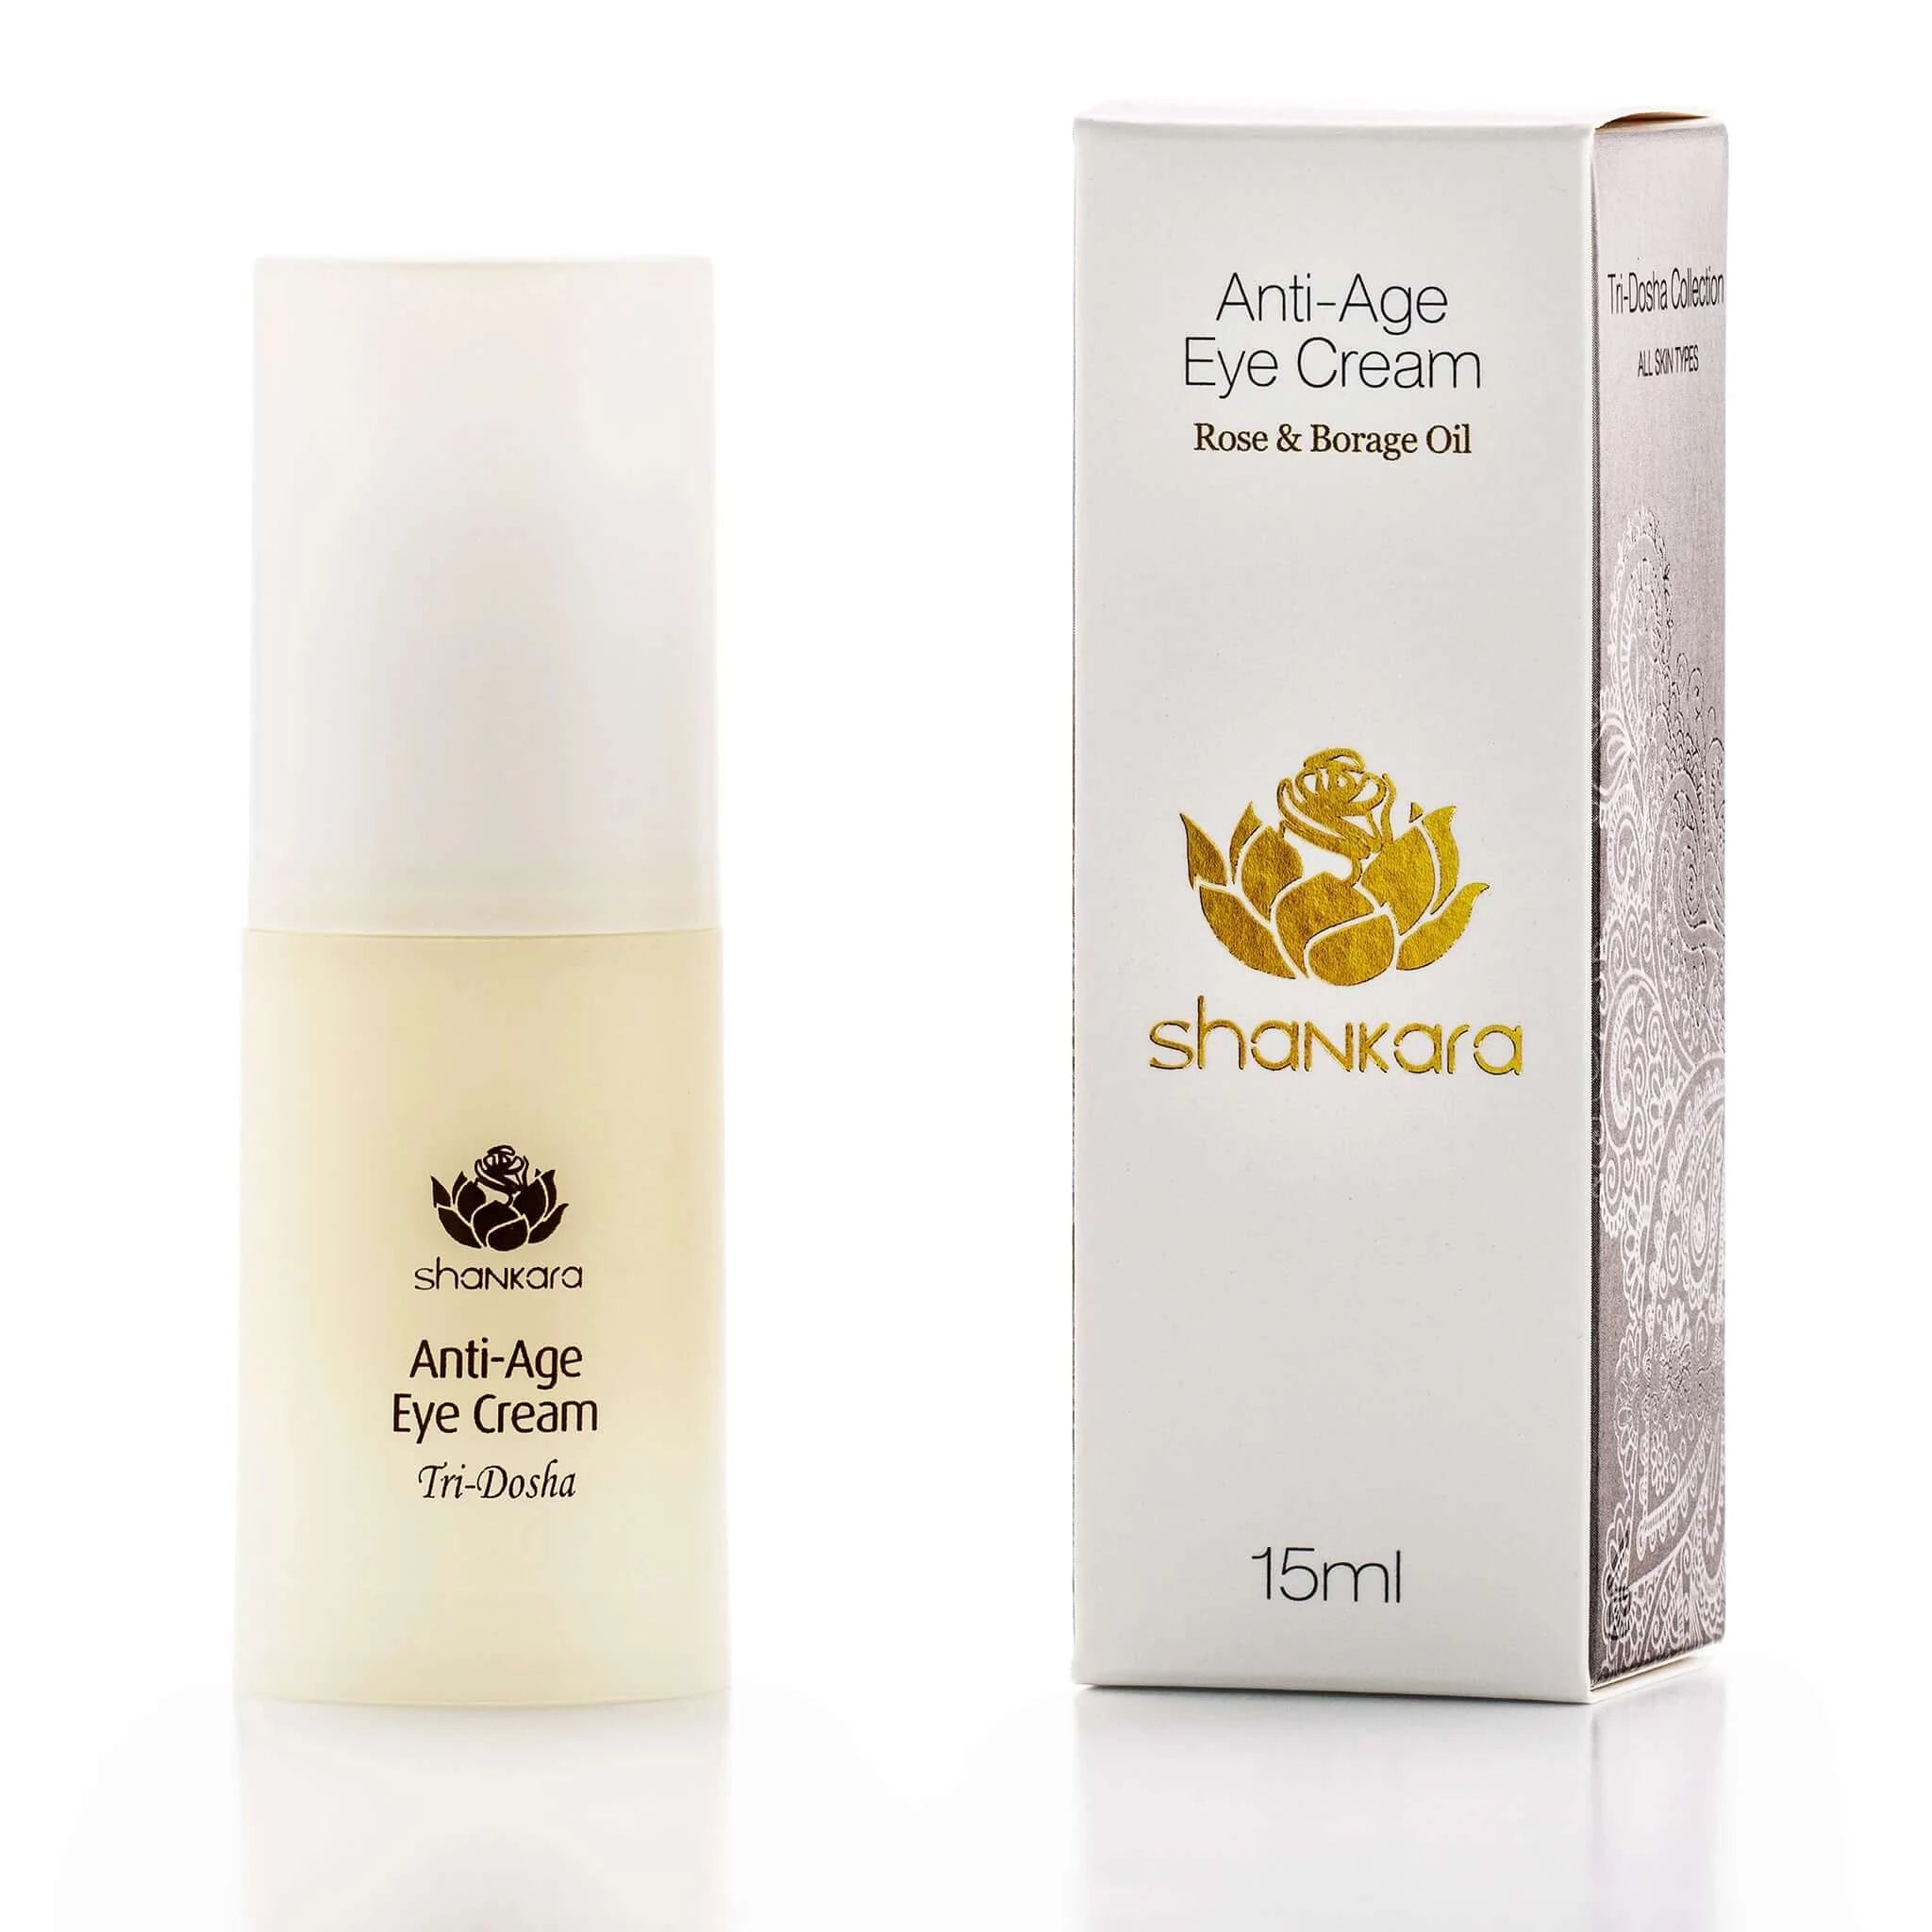 Anti-Age Eye Cream Best for sensitive skin, Moisturizer for eye area, Shankara Naturals, Tridosha